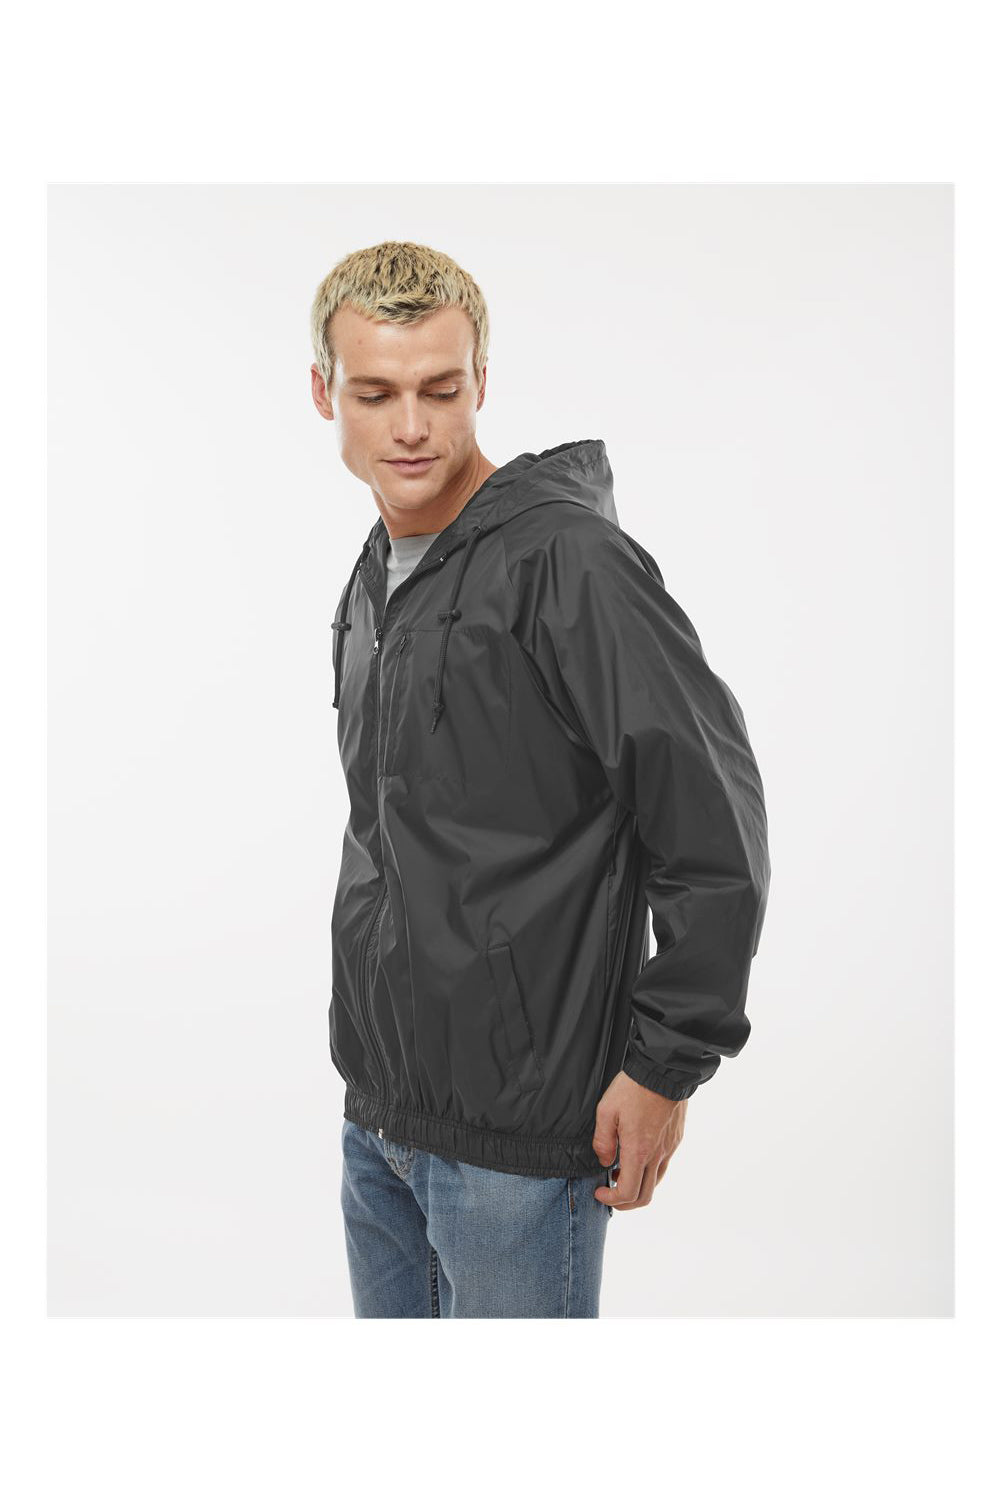 Burnside 9728 Mens Mentor Full Zip Hooded Coaches Jacket Steel Grey Model Side